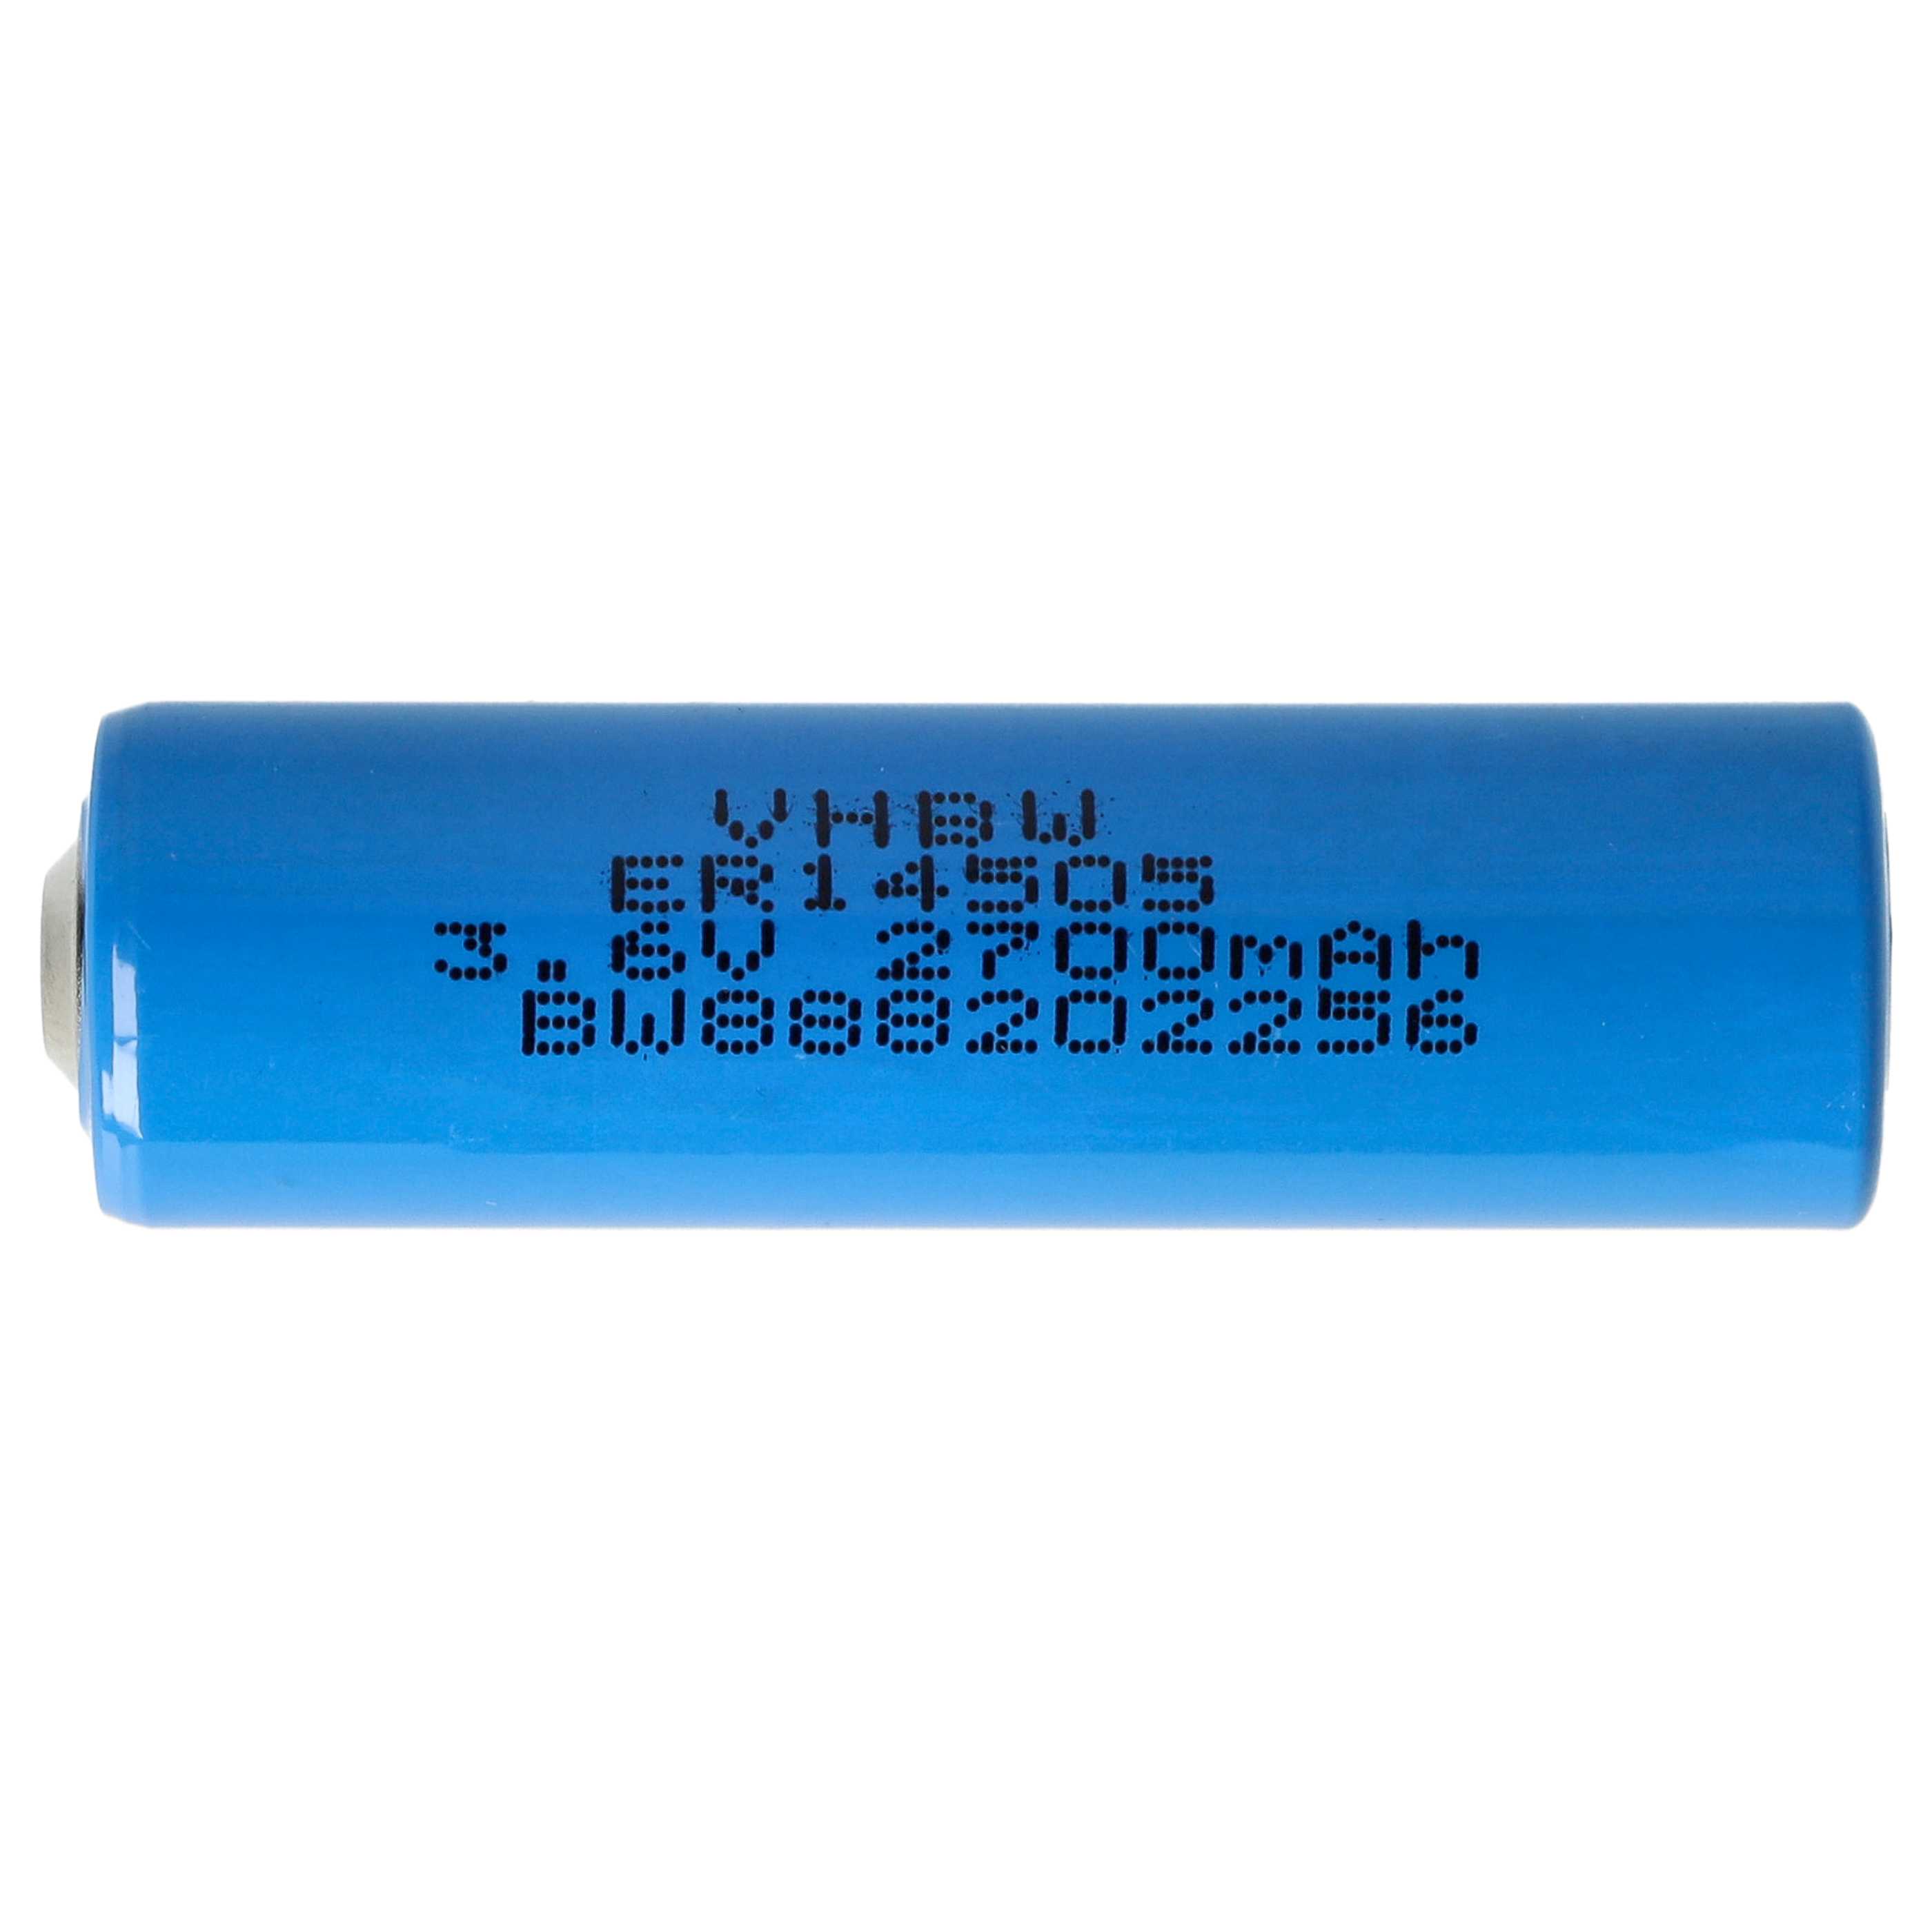 Bateria ER14250 Viessmann Trimatik, Trimatik 2 - 2700 mAh 3,6 V Li-SOCl2